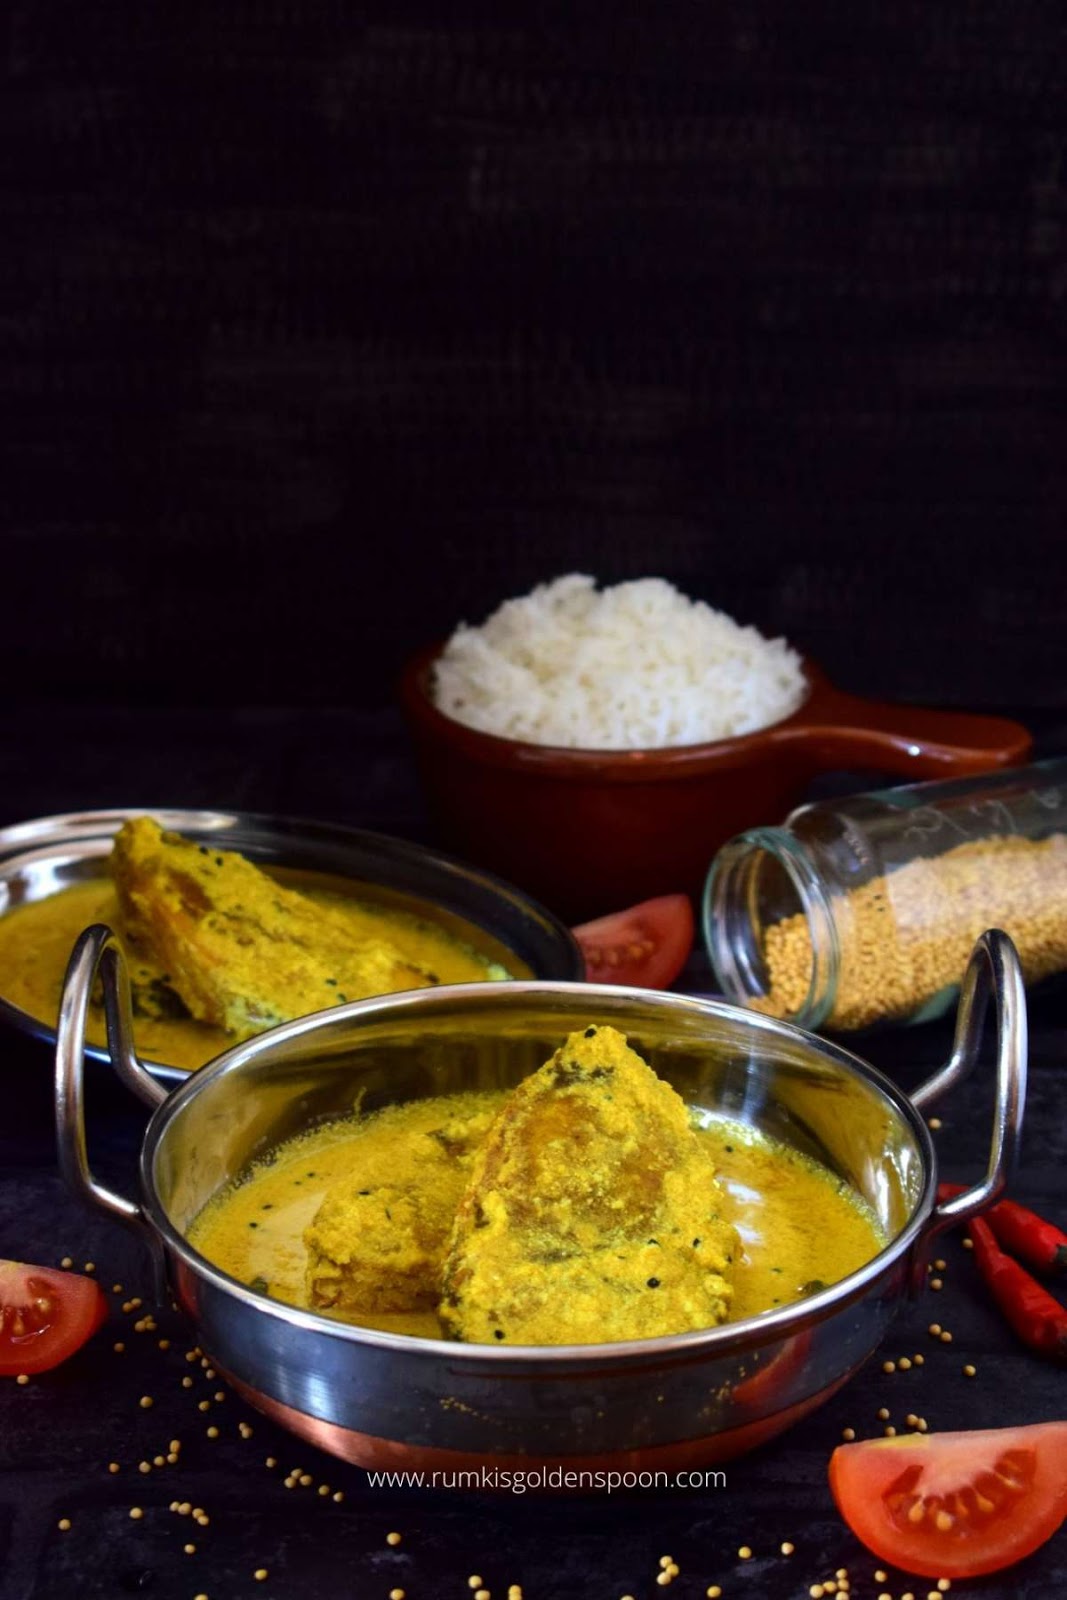 barishali ilish, barishali ilish recipe, ilish barishali, ilish barishali recipe, ilish borishali, borishali ilish, bengali recipe, bengali recipes, bengali food, bengali food recipes, recipes of bengali food, traditional bengali food, bengali traditional food, traditional food of Bengali, bengali fish curry, bengali fish curry recipe, recipe for bengali fish curry, recipe of bengali fish curry, Bengali recipe fish, Bengali recipes fish, Bengali recipe of fish, Bengali recipe for fish, Bengali fish recipe, macher jhol, bengali macher jhol, elish mas, recipe for hilsa fish, hilsa recipe, hilsa fish curry, hilsa fish recipe, recipe of hilsa fish, recipe for hilsa fish, hilsa fish Bengali recipe, how to cook hilsa fish, how to cook Ilish fish, ilish mach recipe, ilish macher recipe, ilish macher jhol recipe, Rumki's Golden Spoon